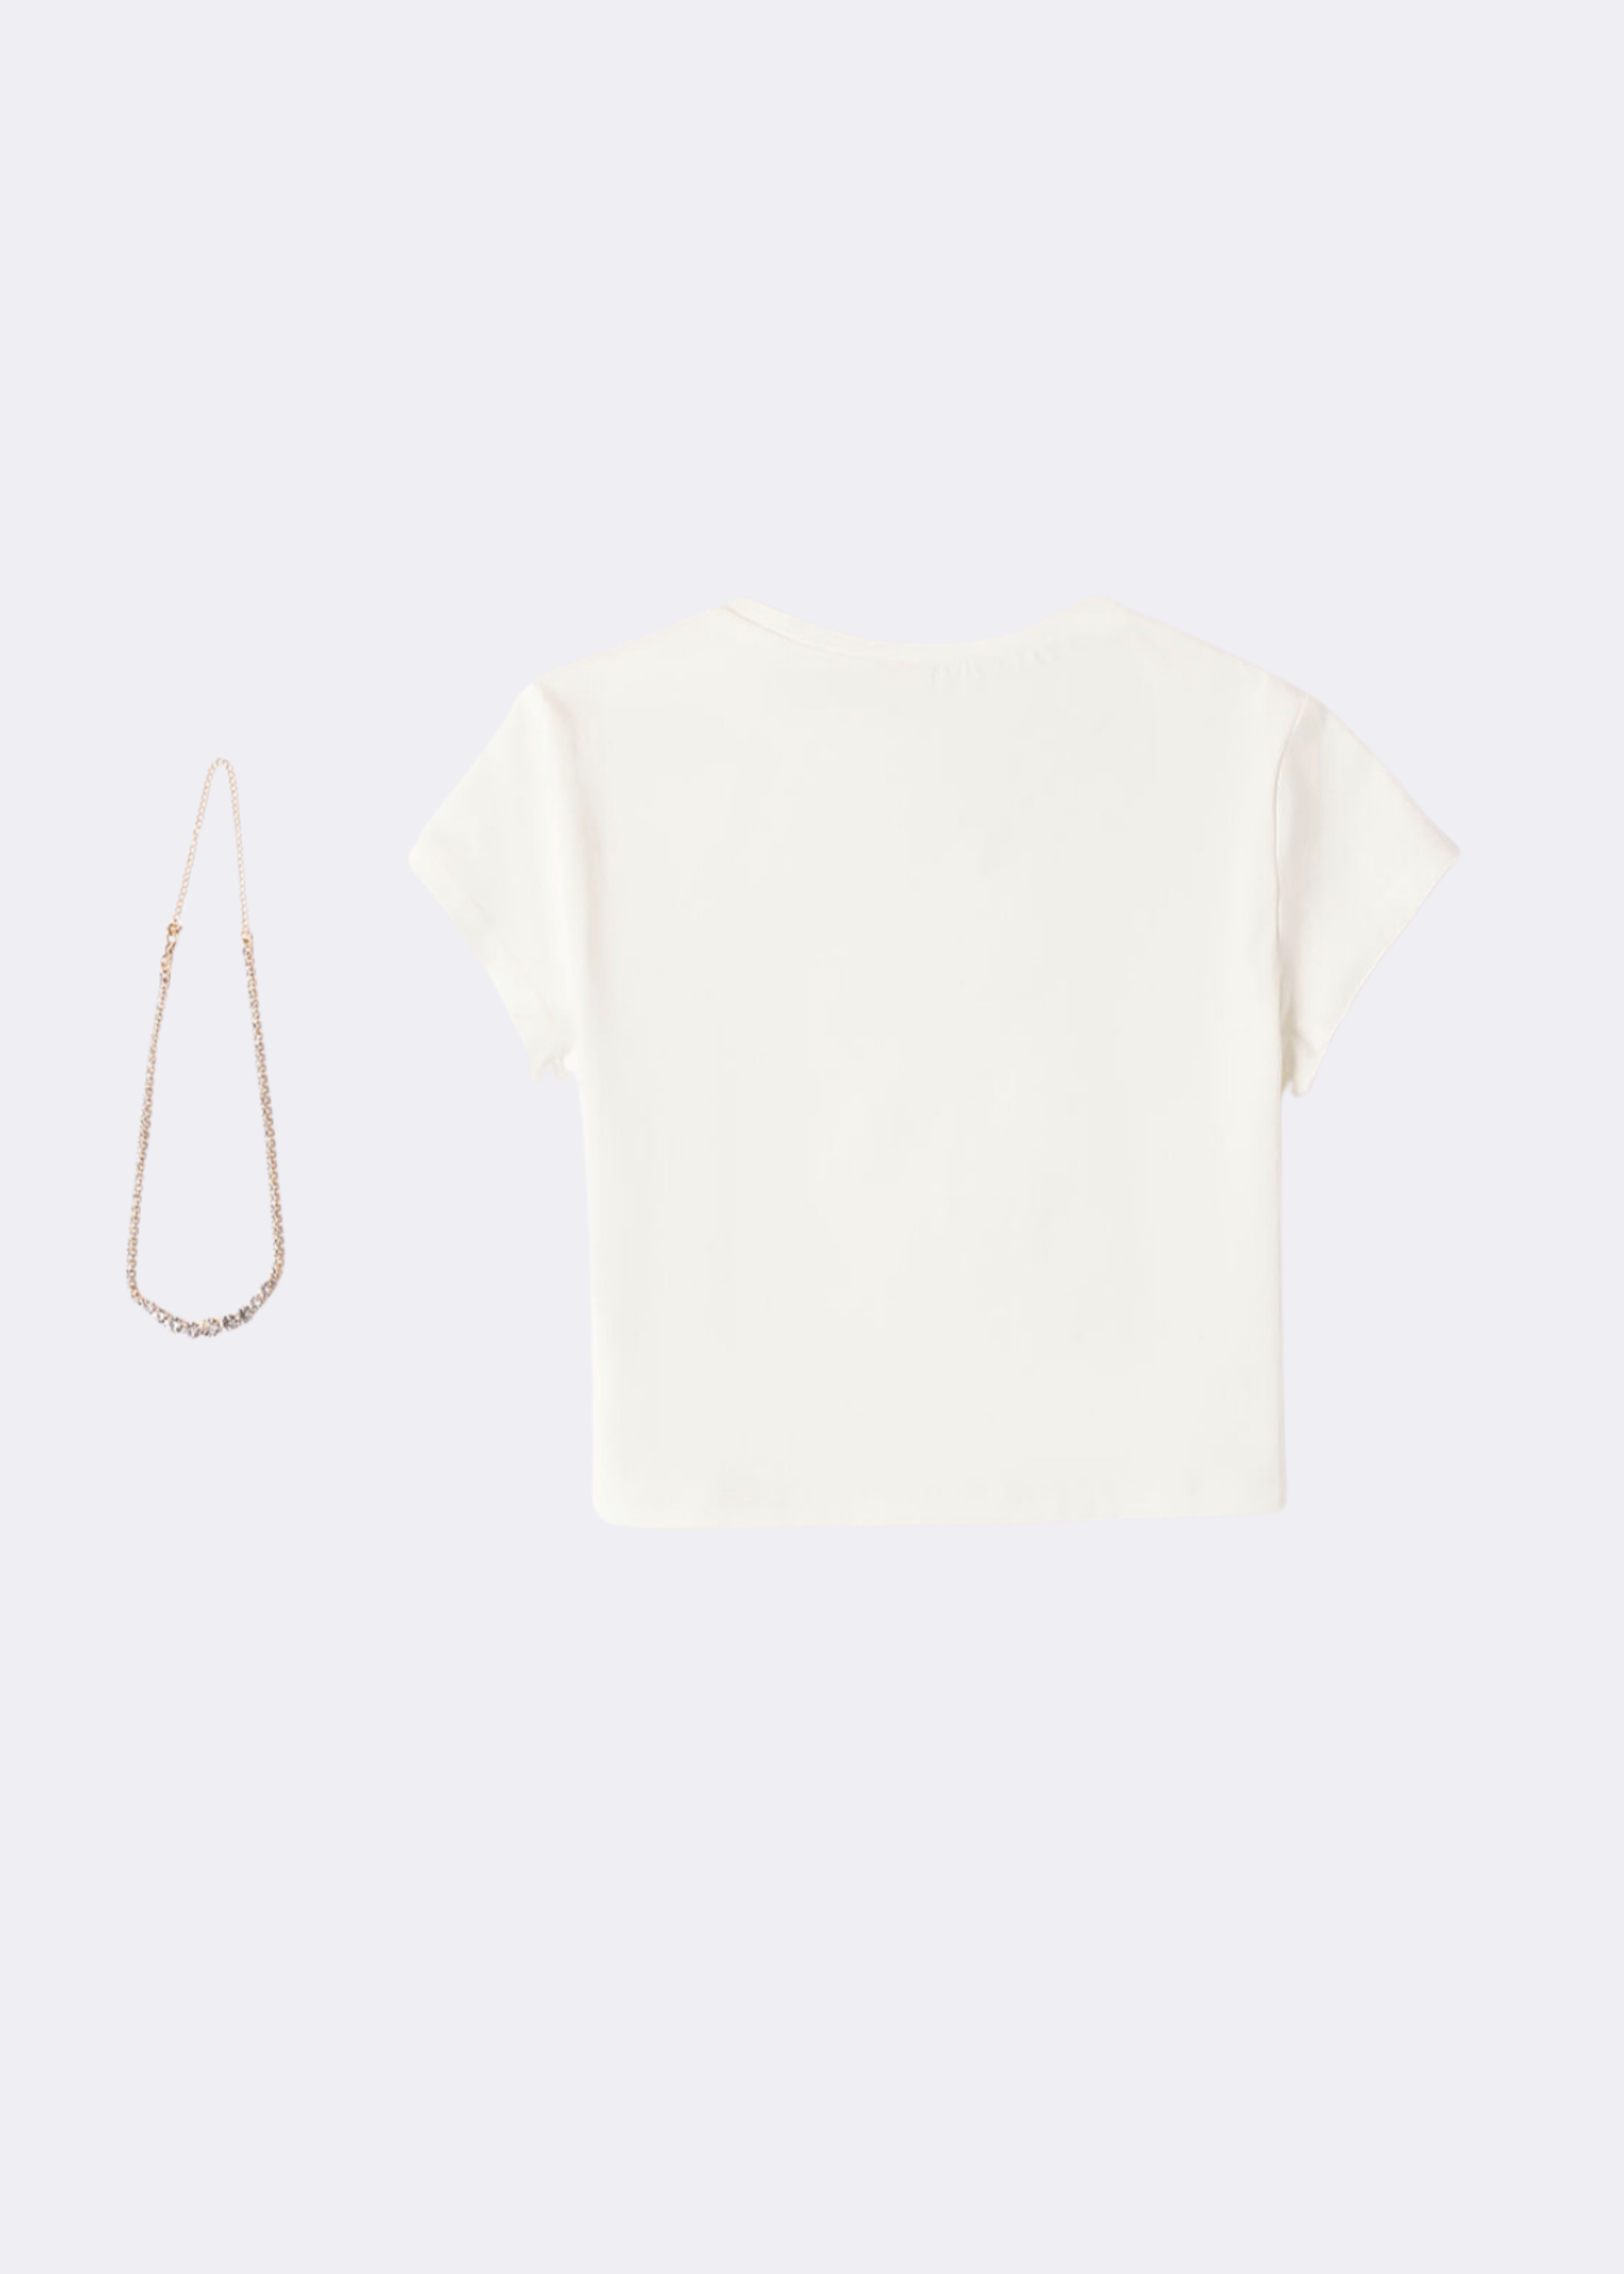 iDO White T-shirt Necklace